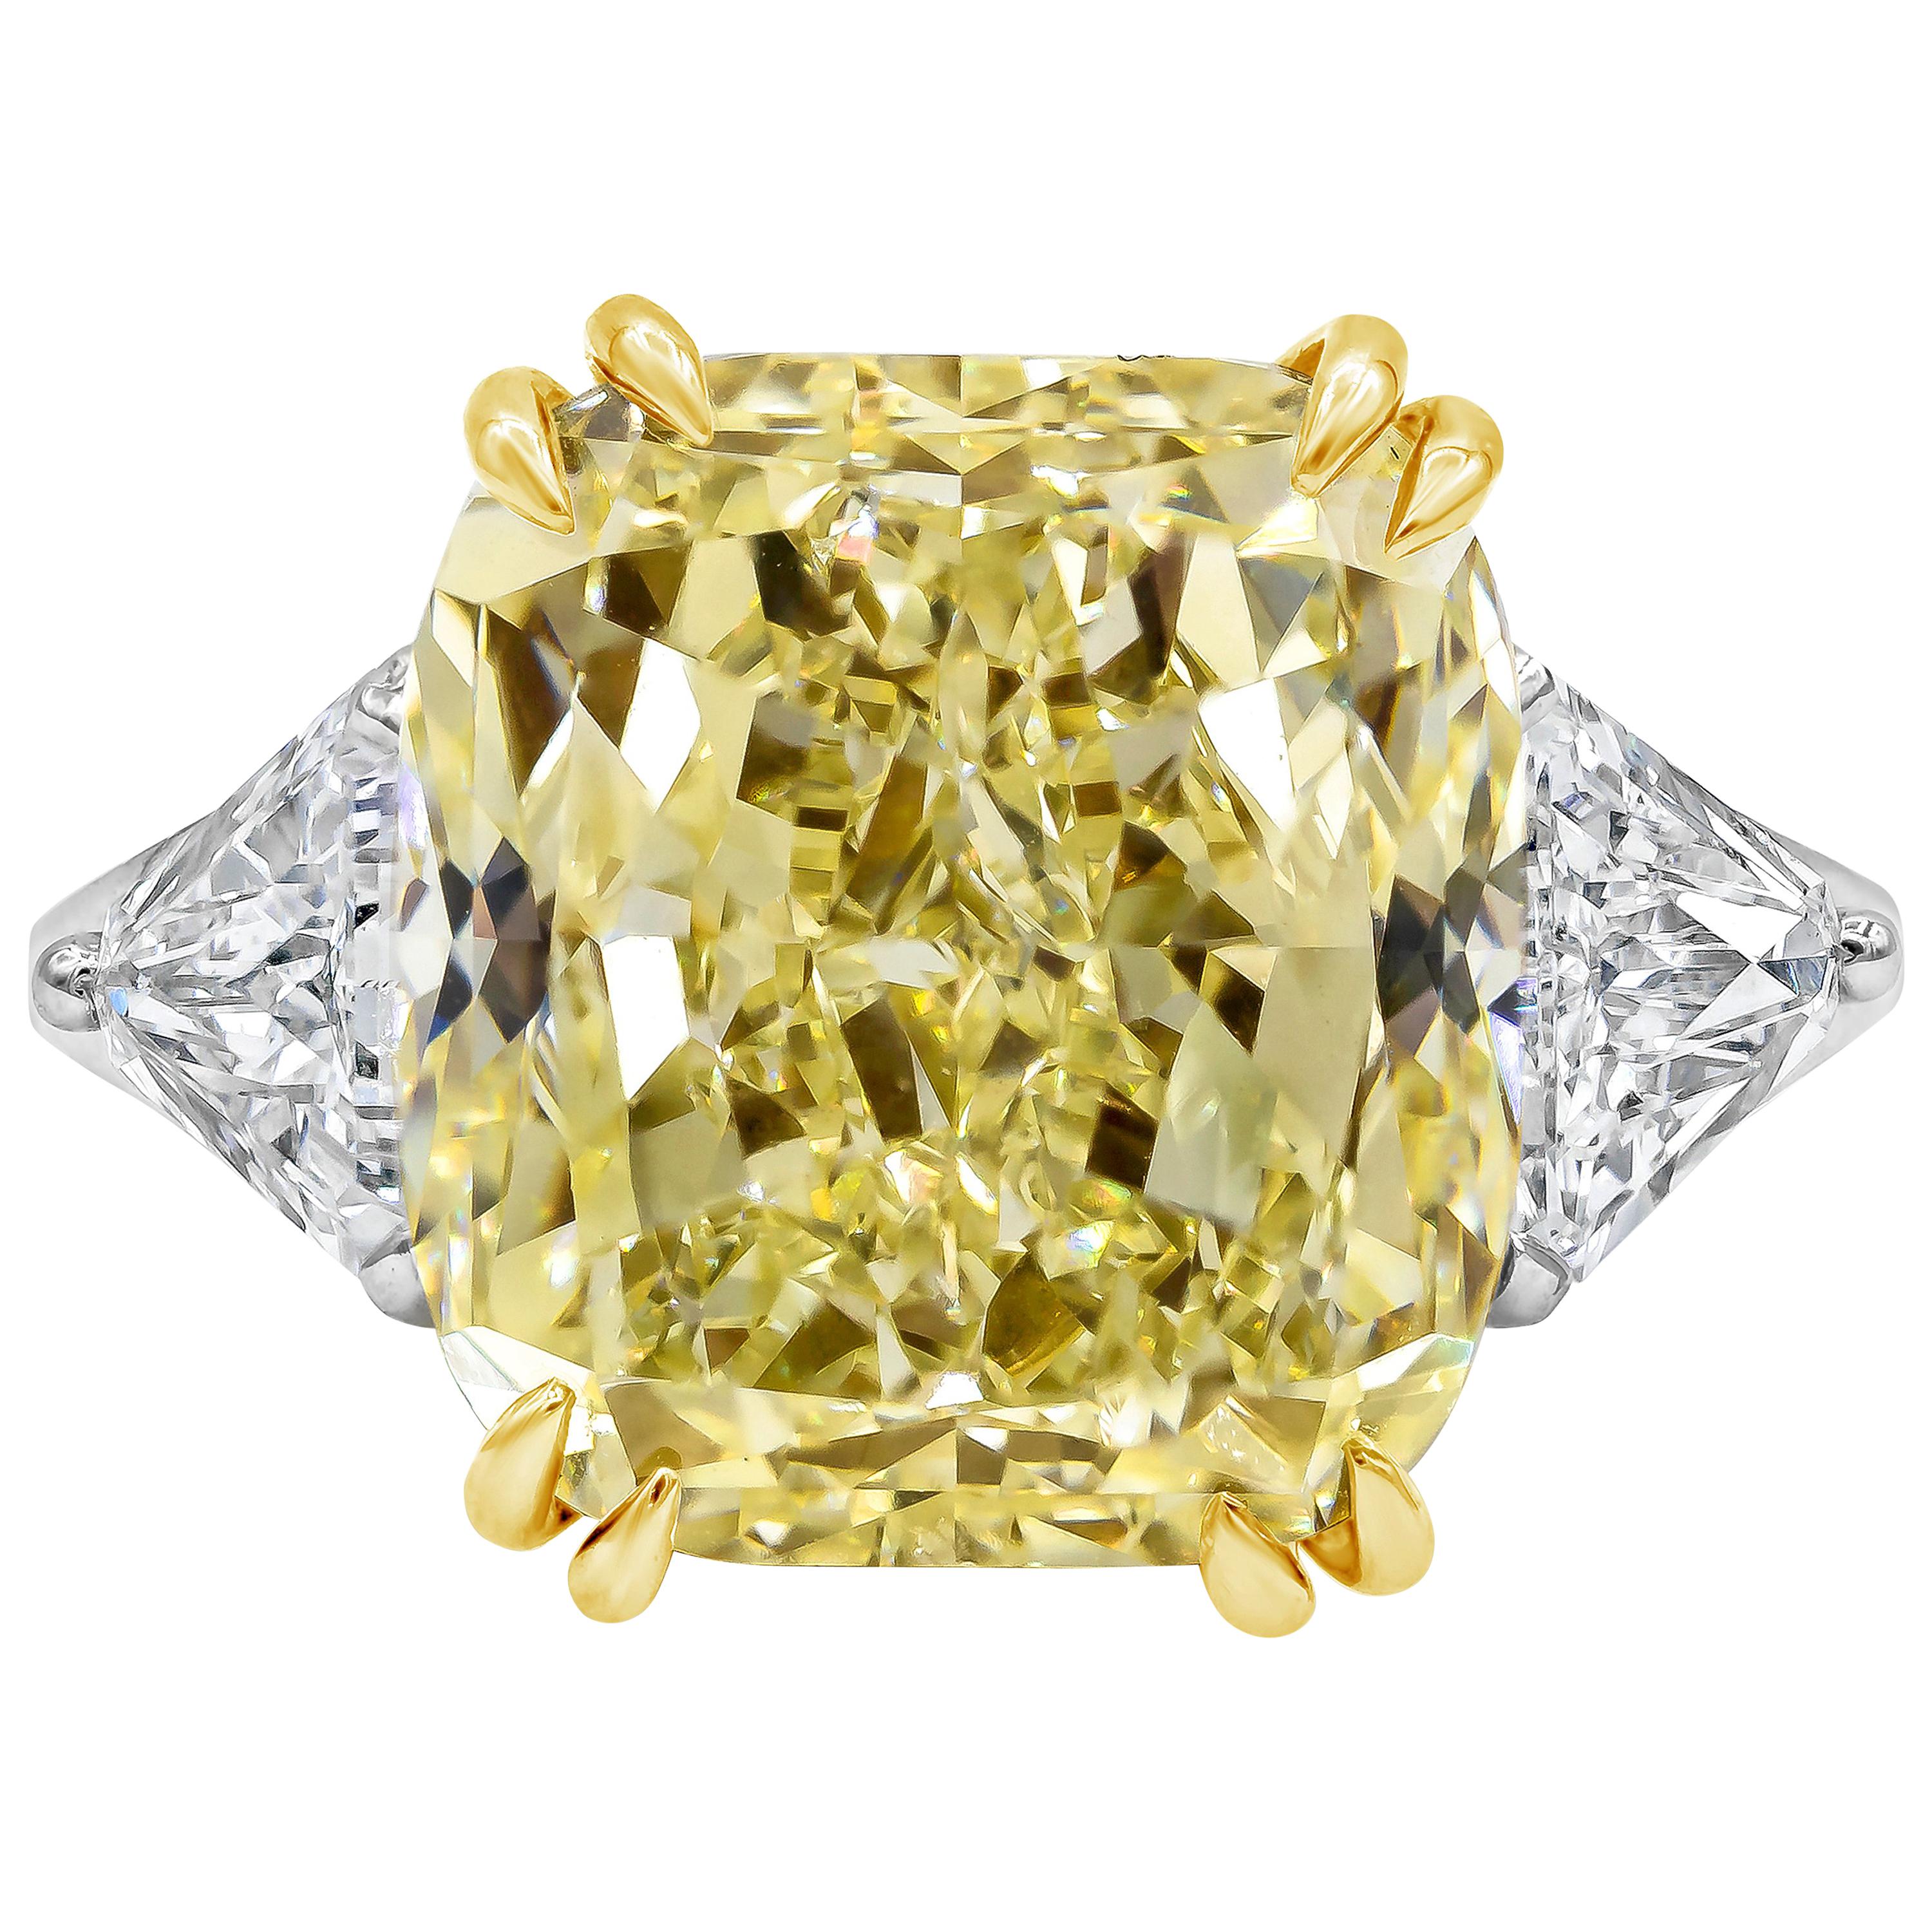 GIA Certified 12.15 Carat Cushion Cut Fancy Light Yellow Diamond Engagement Ring